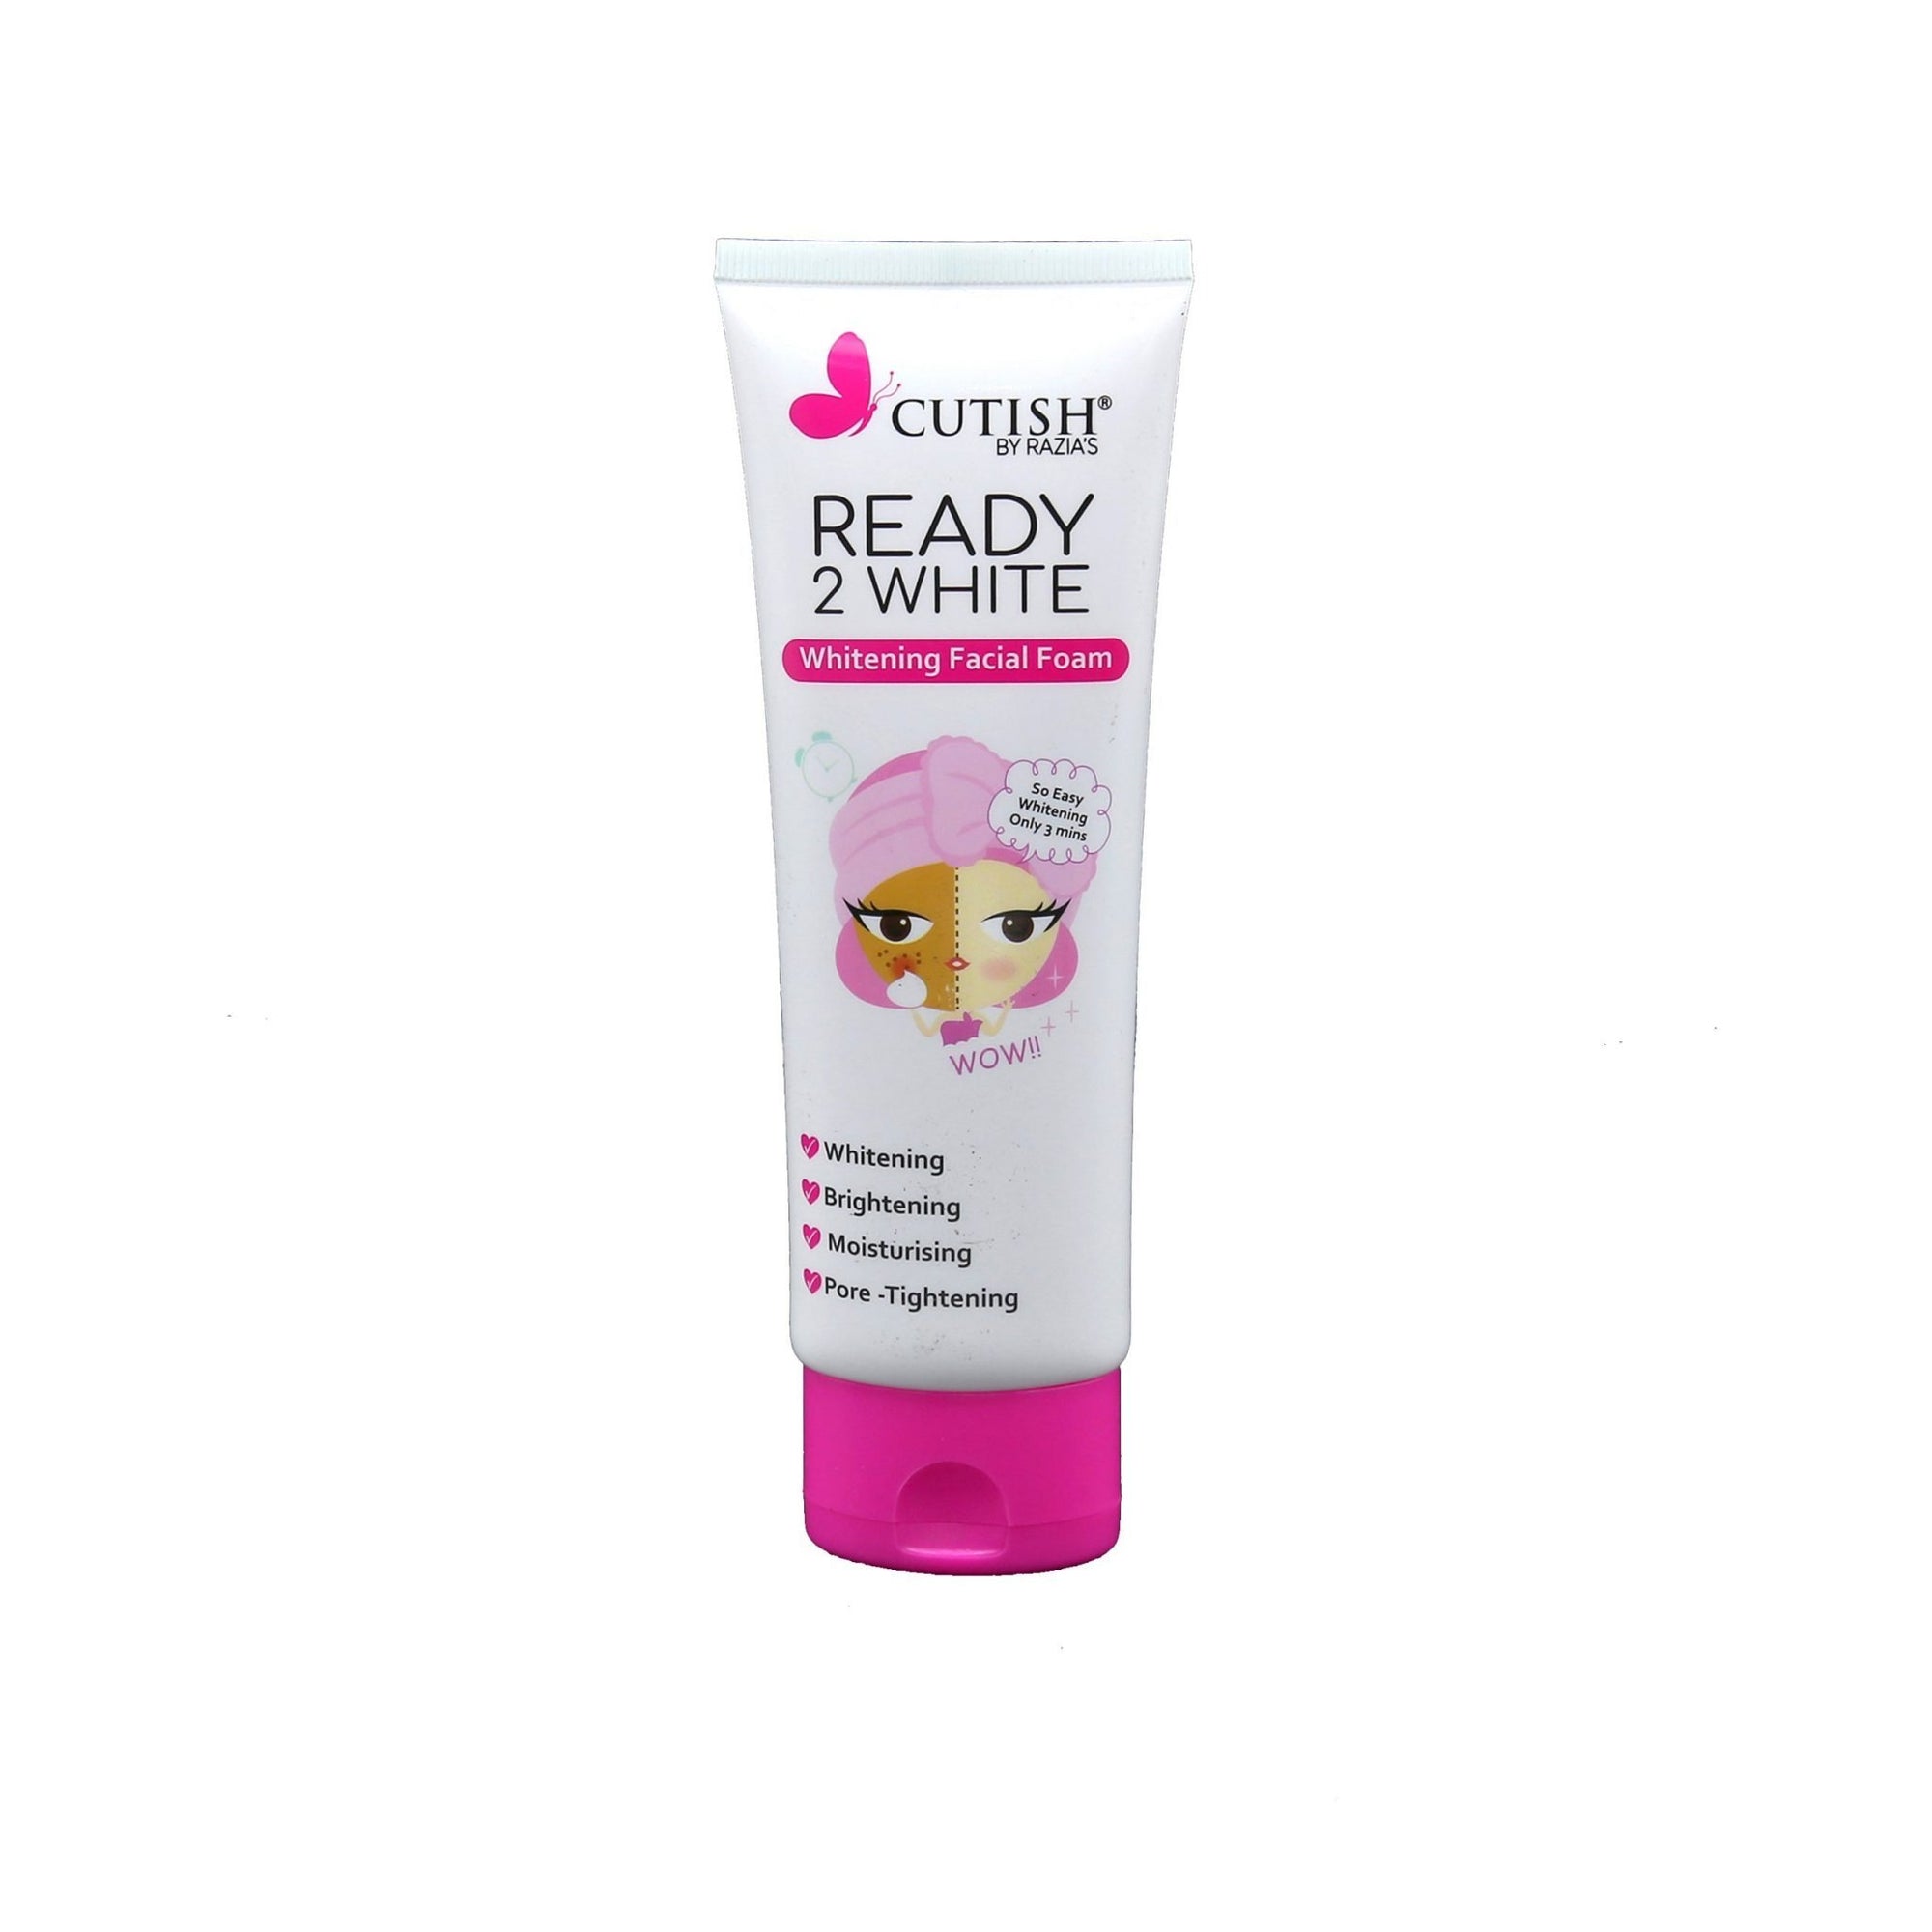 Cutish Ready to White Facewash Whitening Facial Foam 100g freeshipping - lasertag.pk